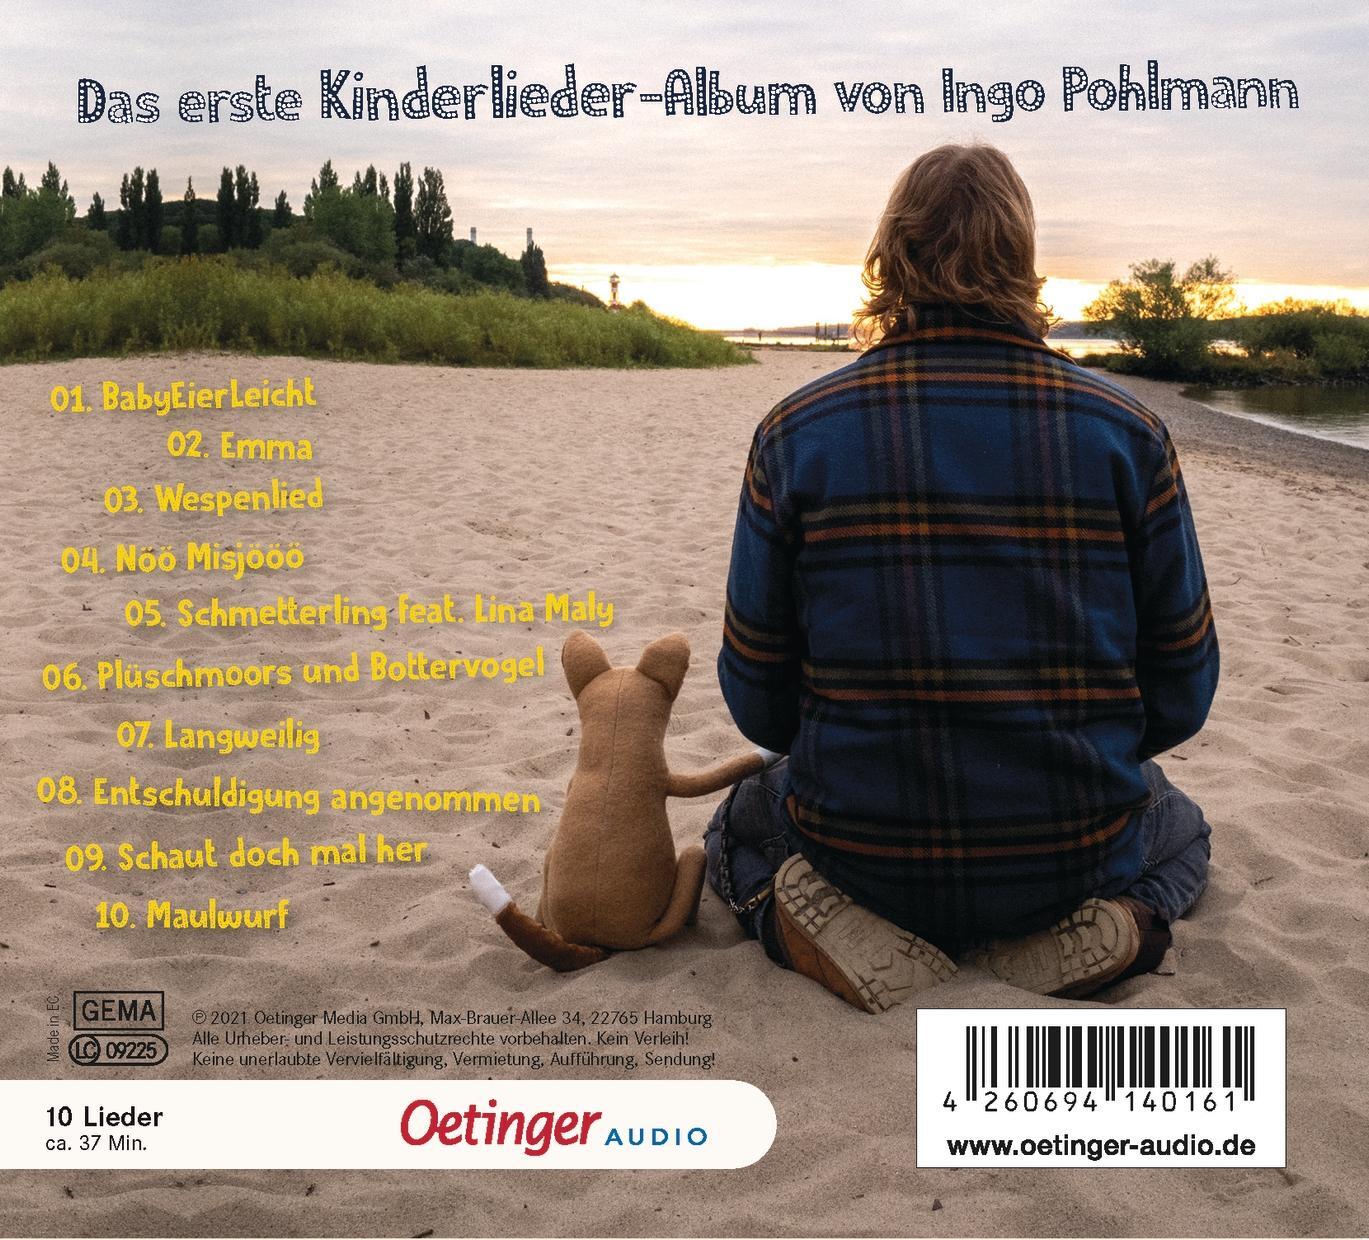 Rückseite: 4260694140161 | Dingoingo. Kinderlieder von Pohlmann | Ingo Pohlmann | Audio-CD | 2021